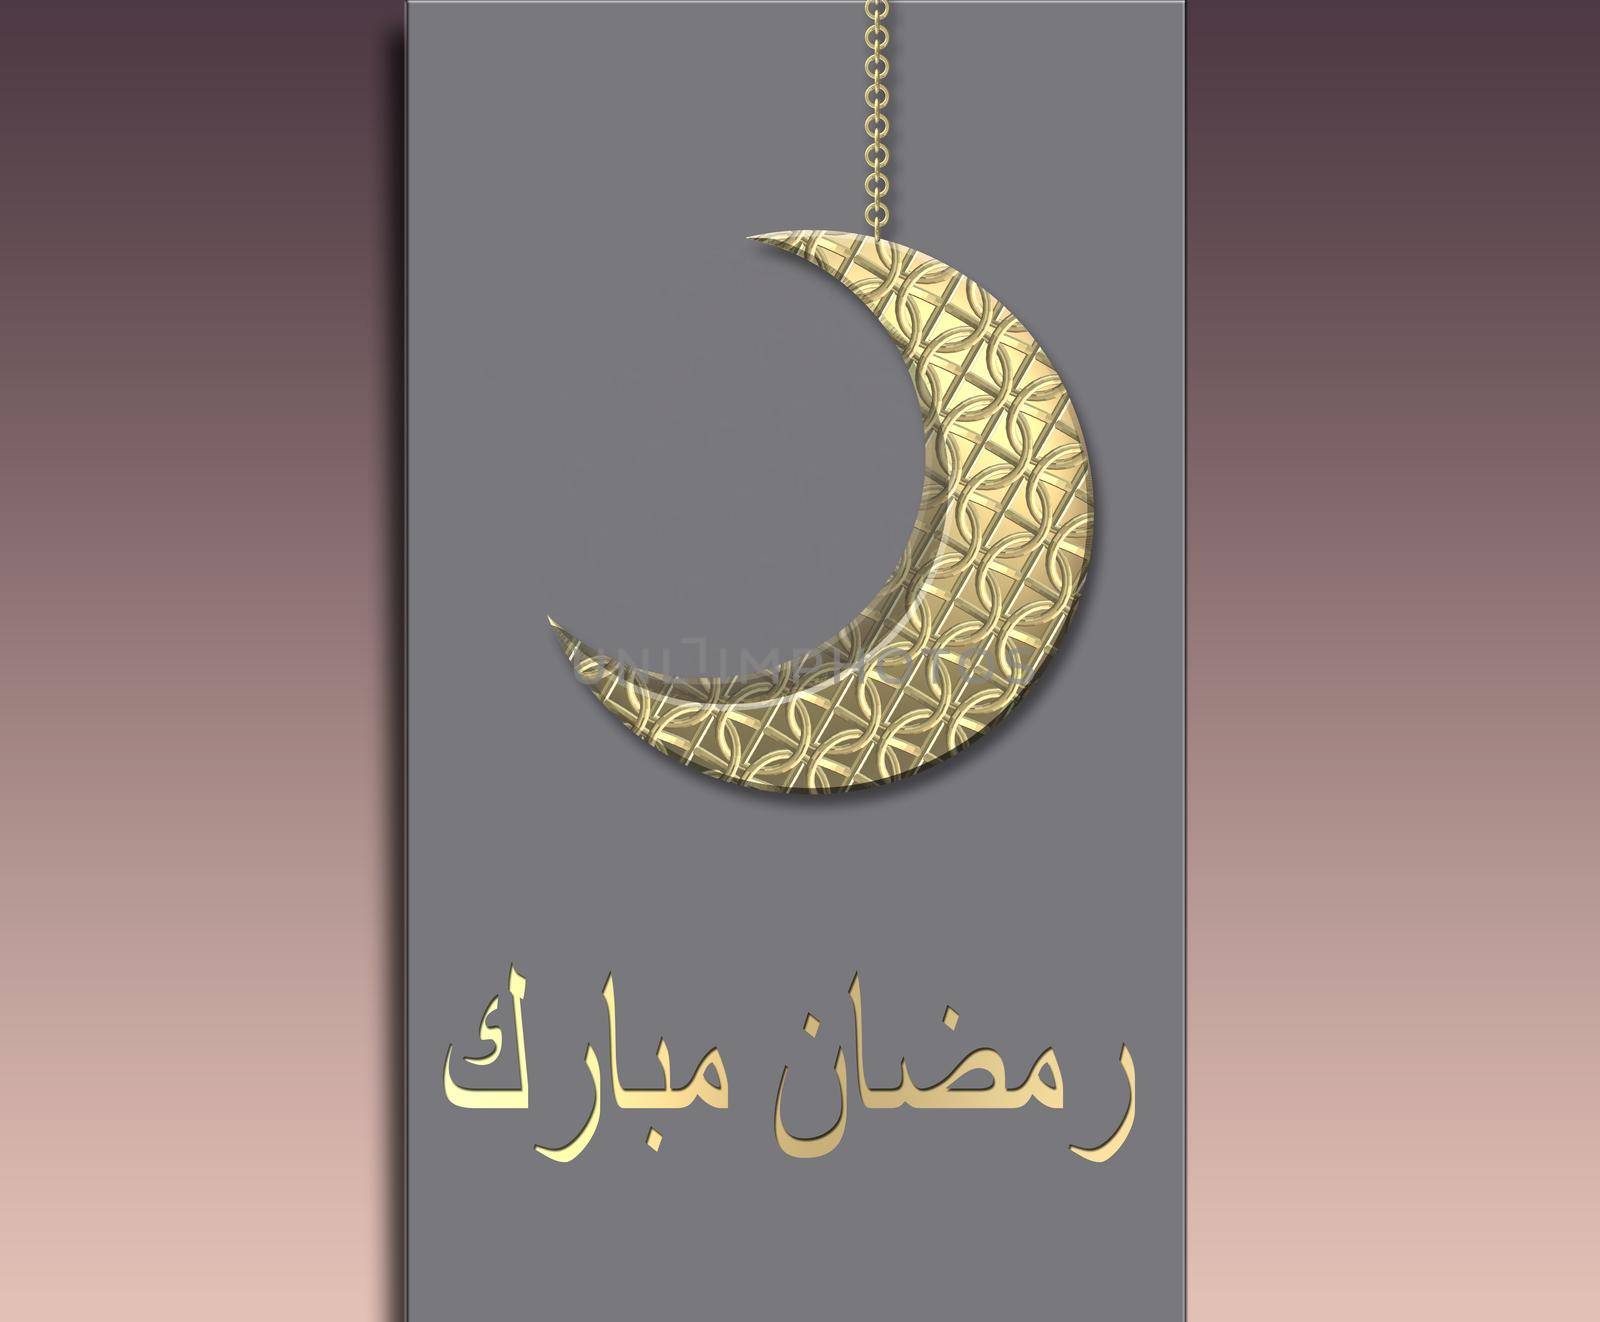 Crescent moon background for Ramadan celebration card over pastel grey. Ramadan greeting cards. Arabic text translation Happy Ramadan. 3D render